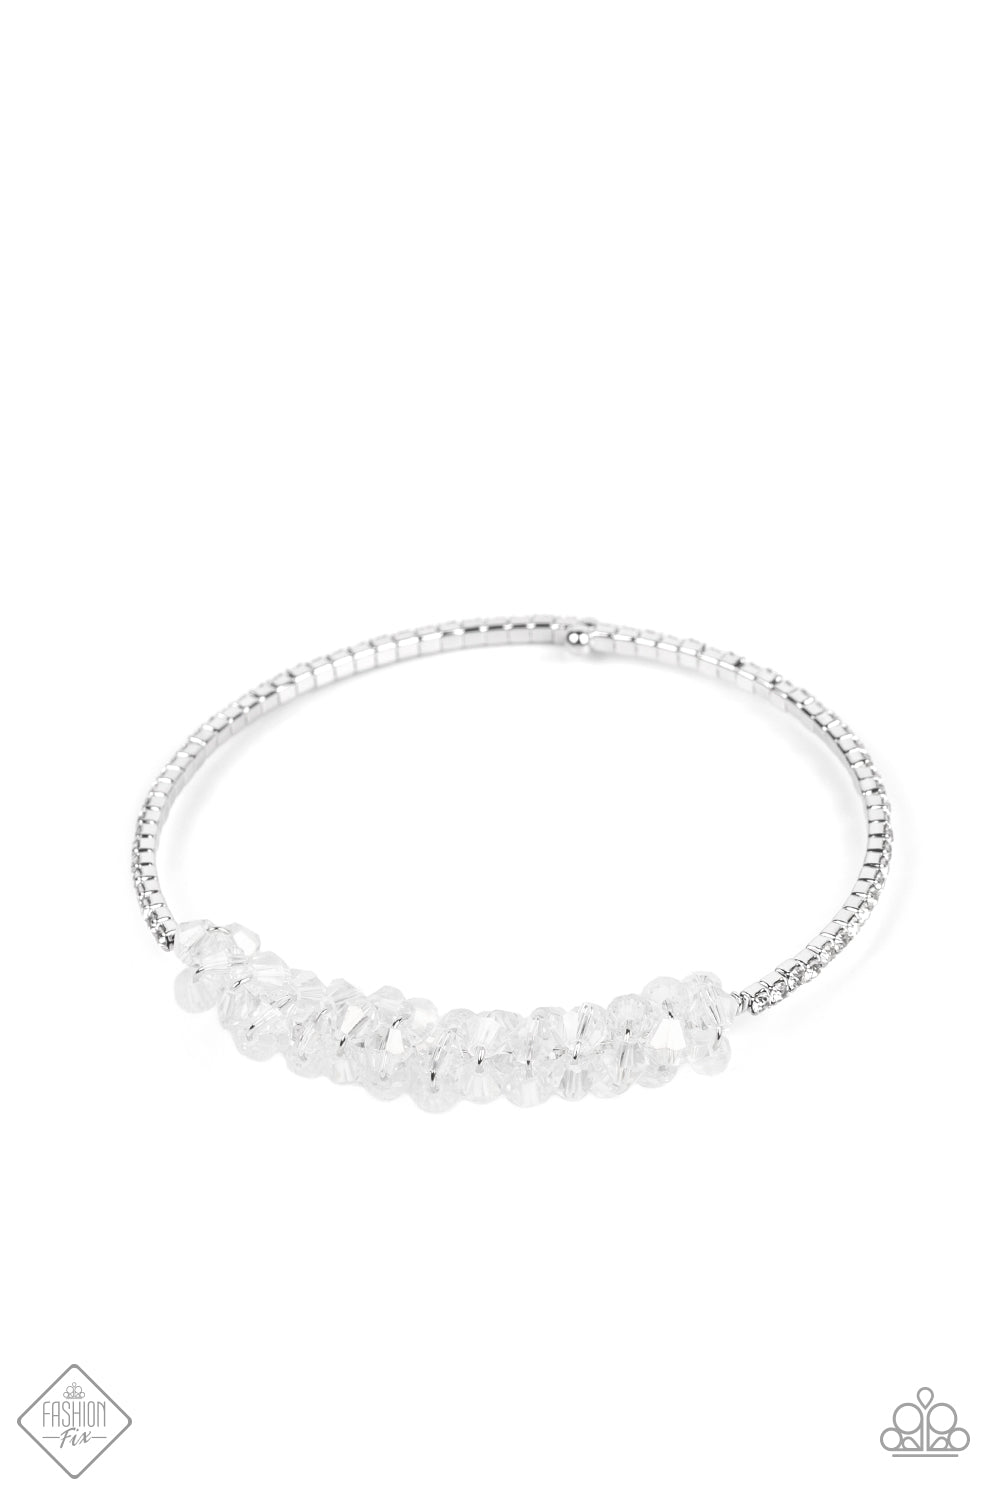 BAUBLY Personality - White (Crystal-like Beads) Bracelet (FFA-0822)